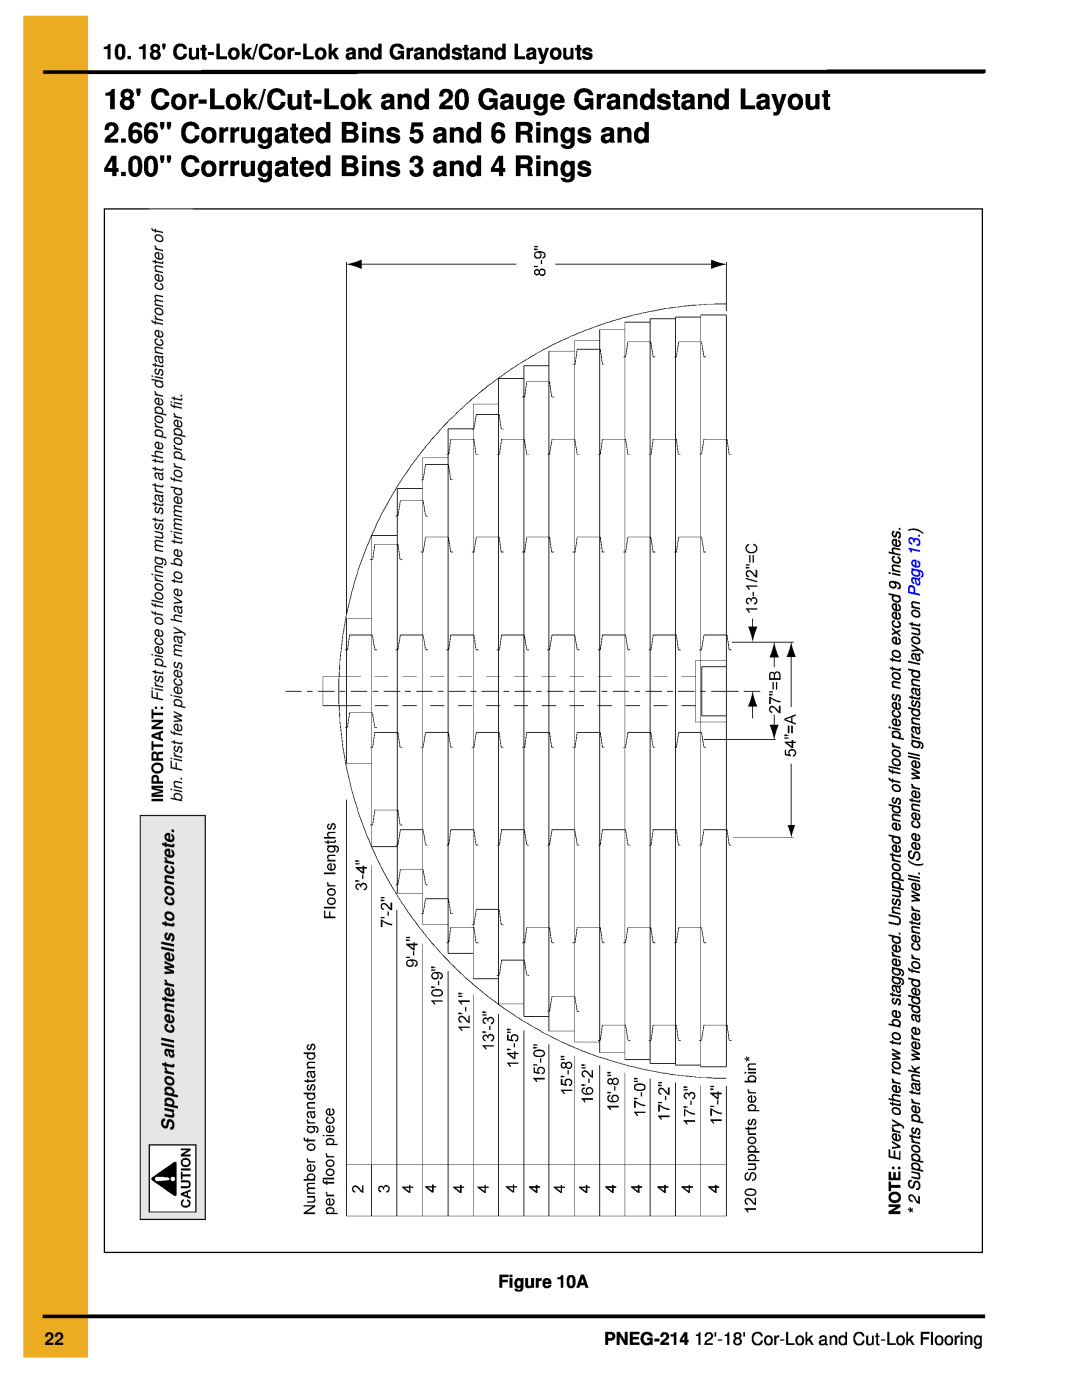 GSI Outdoors PNEG-214 installation manual Corrugated Bins 3 and 4 Rings, 10. 18 Cut-Lok/Cor-Lokand Grandstand Layouts, A 